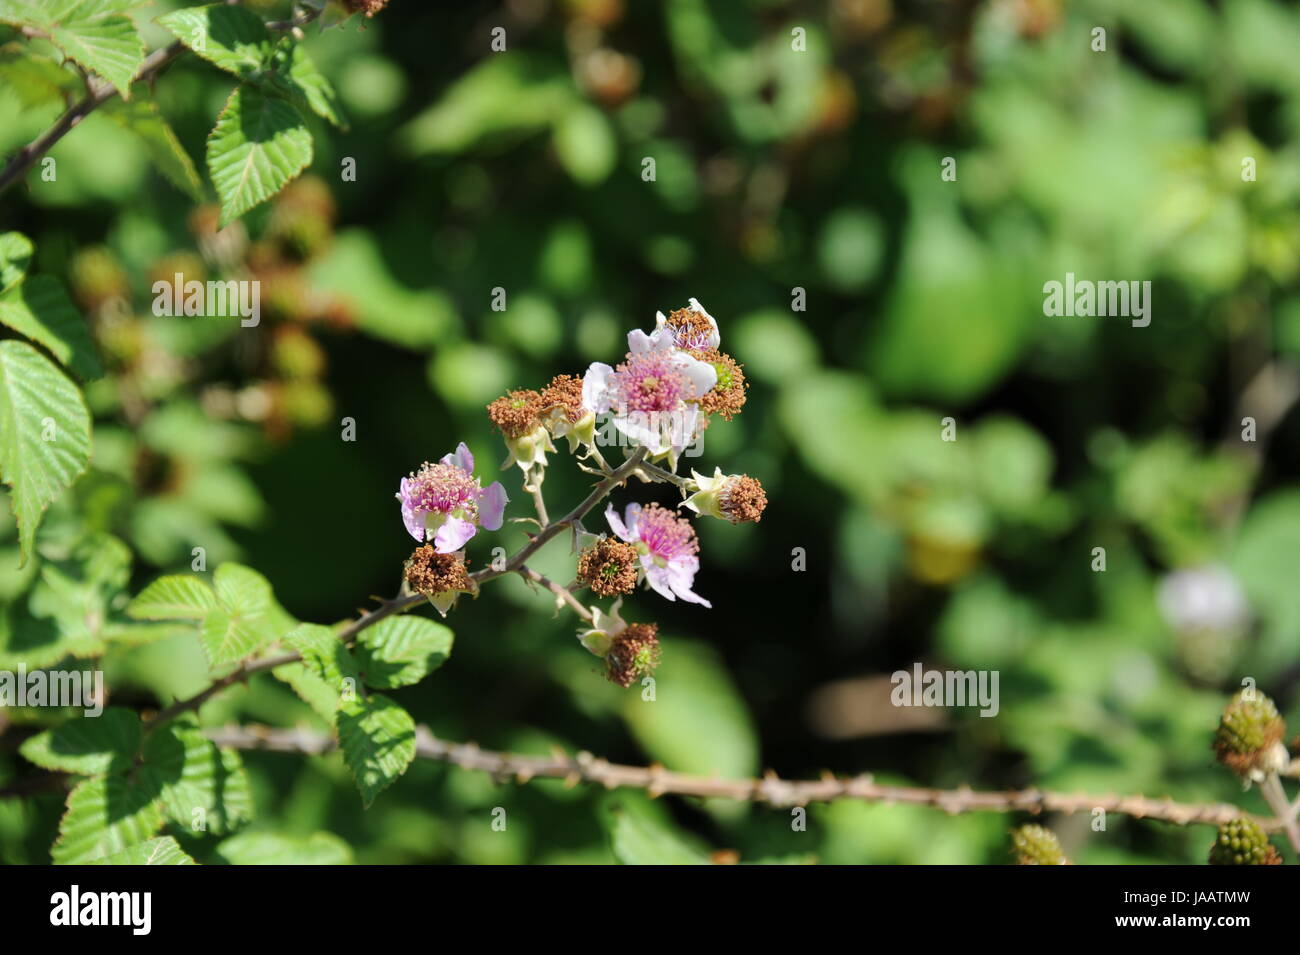 spain - blackberry Stock Photo